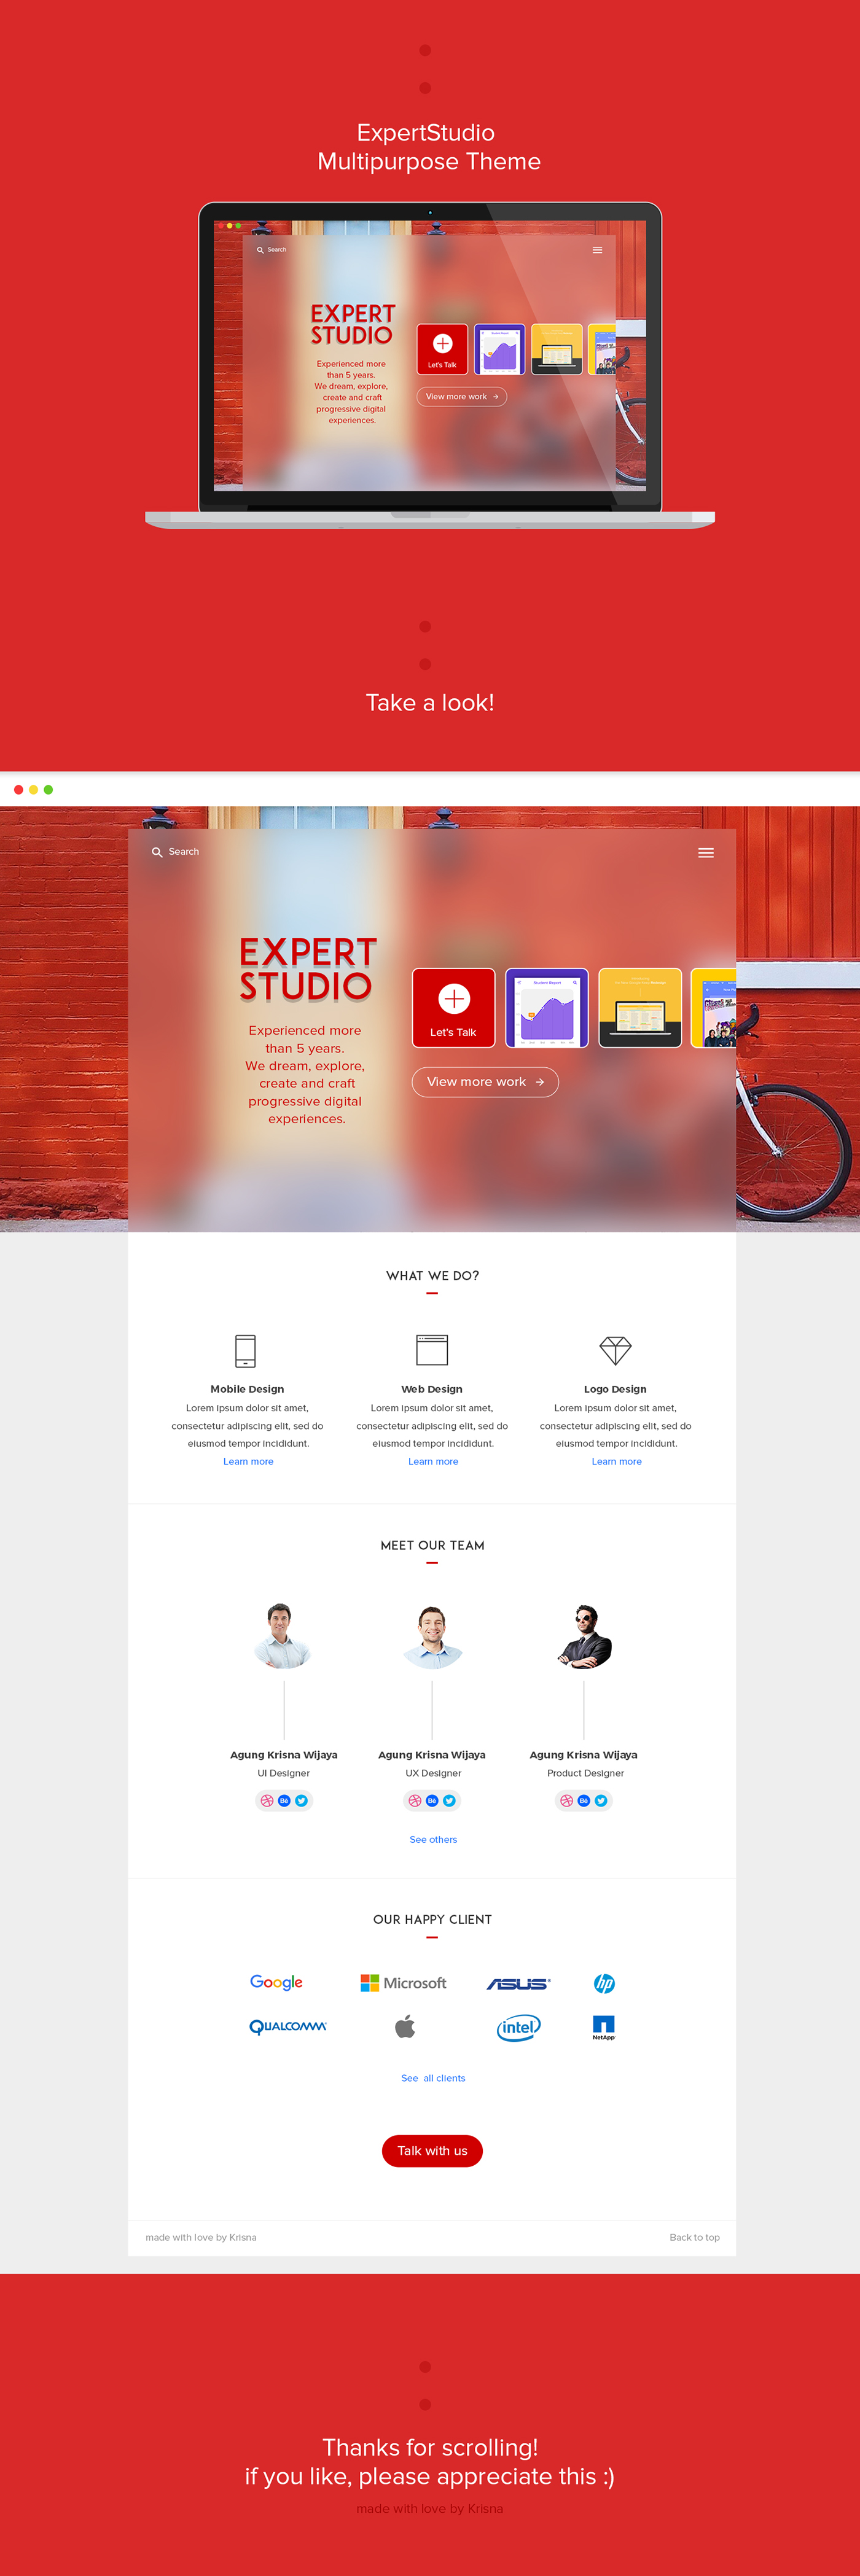 Multipurpose Theme red elegant simple comfortable Freelance modern